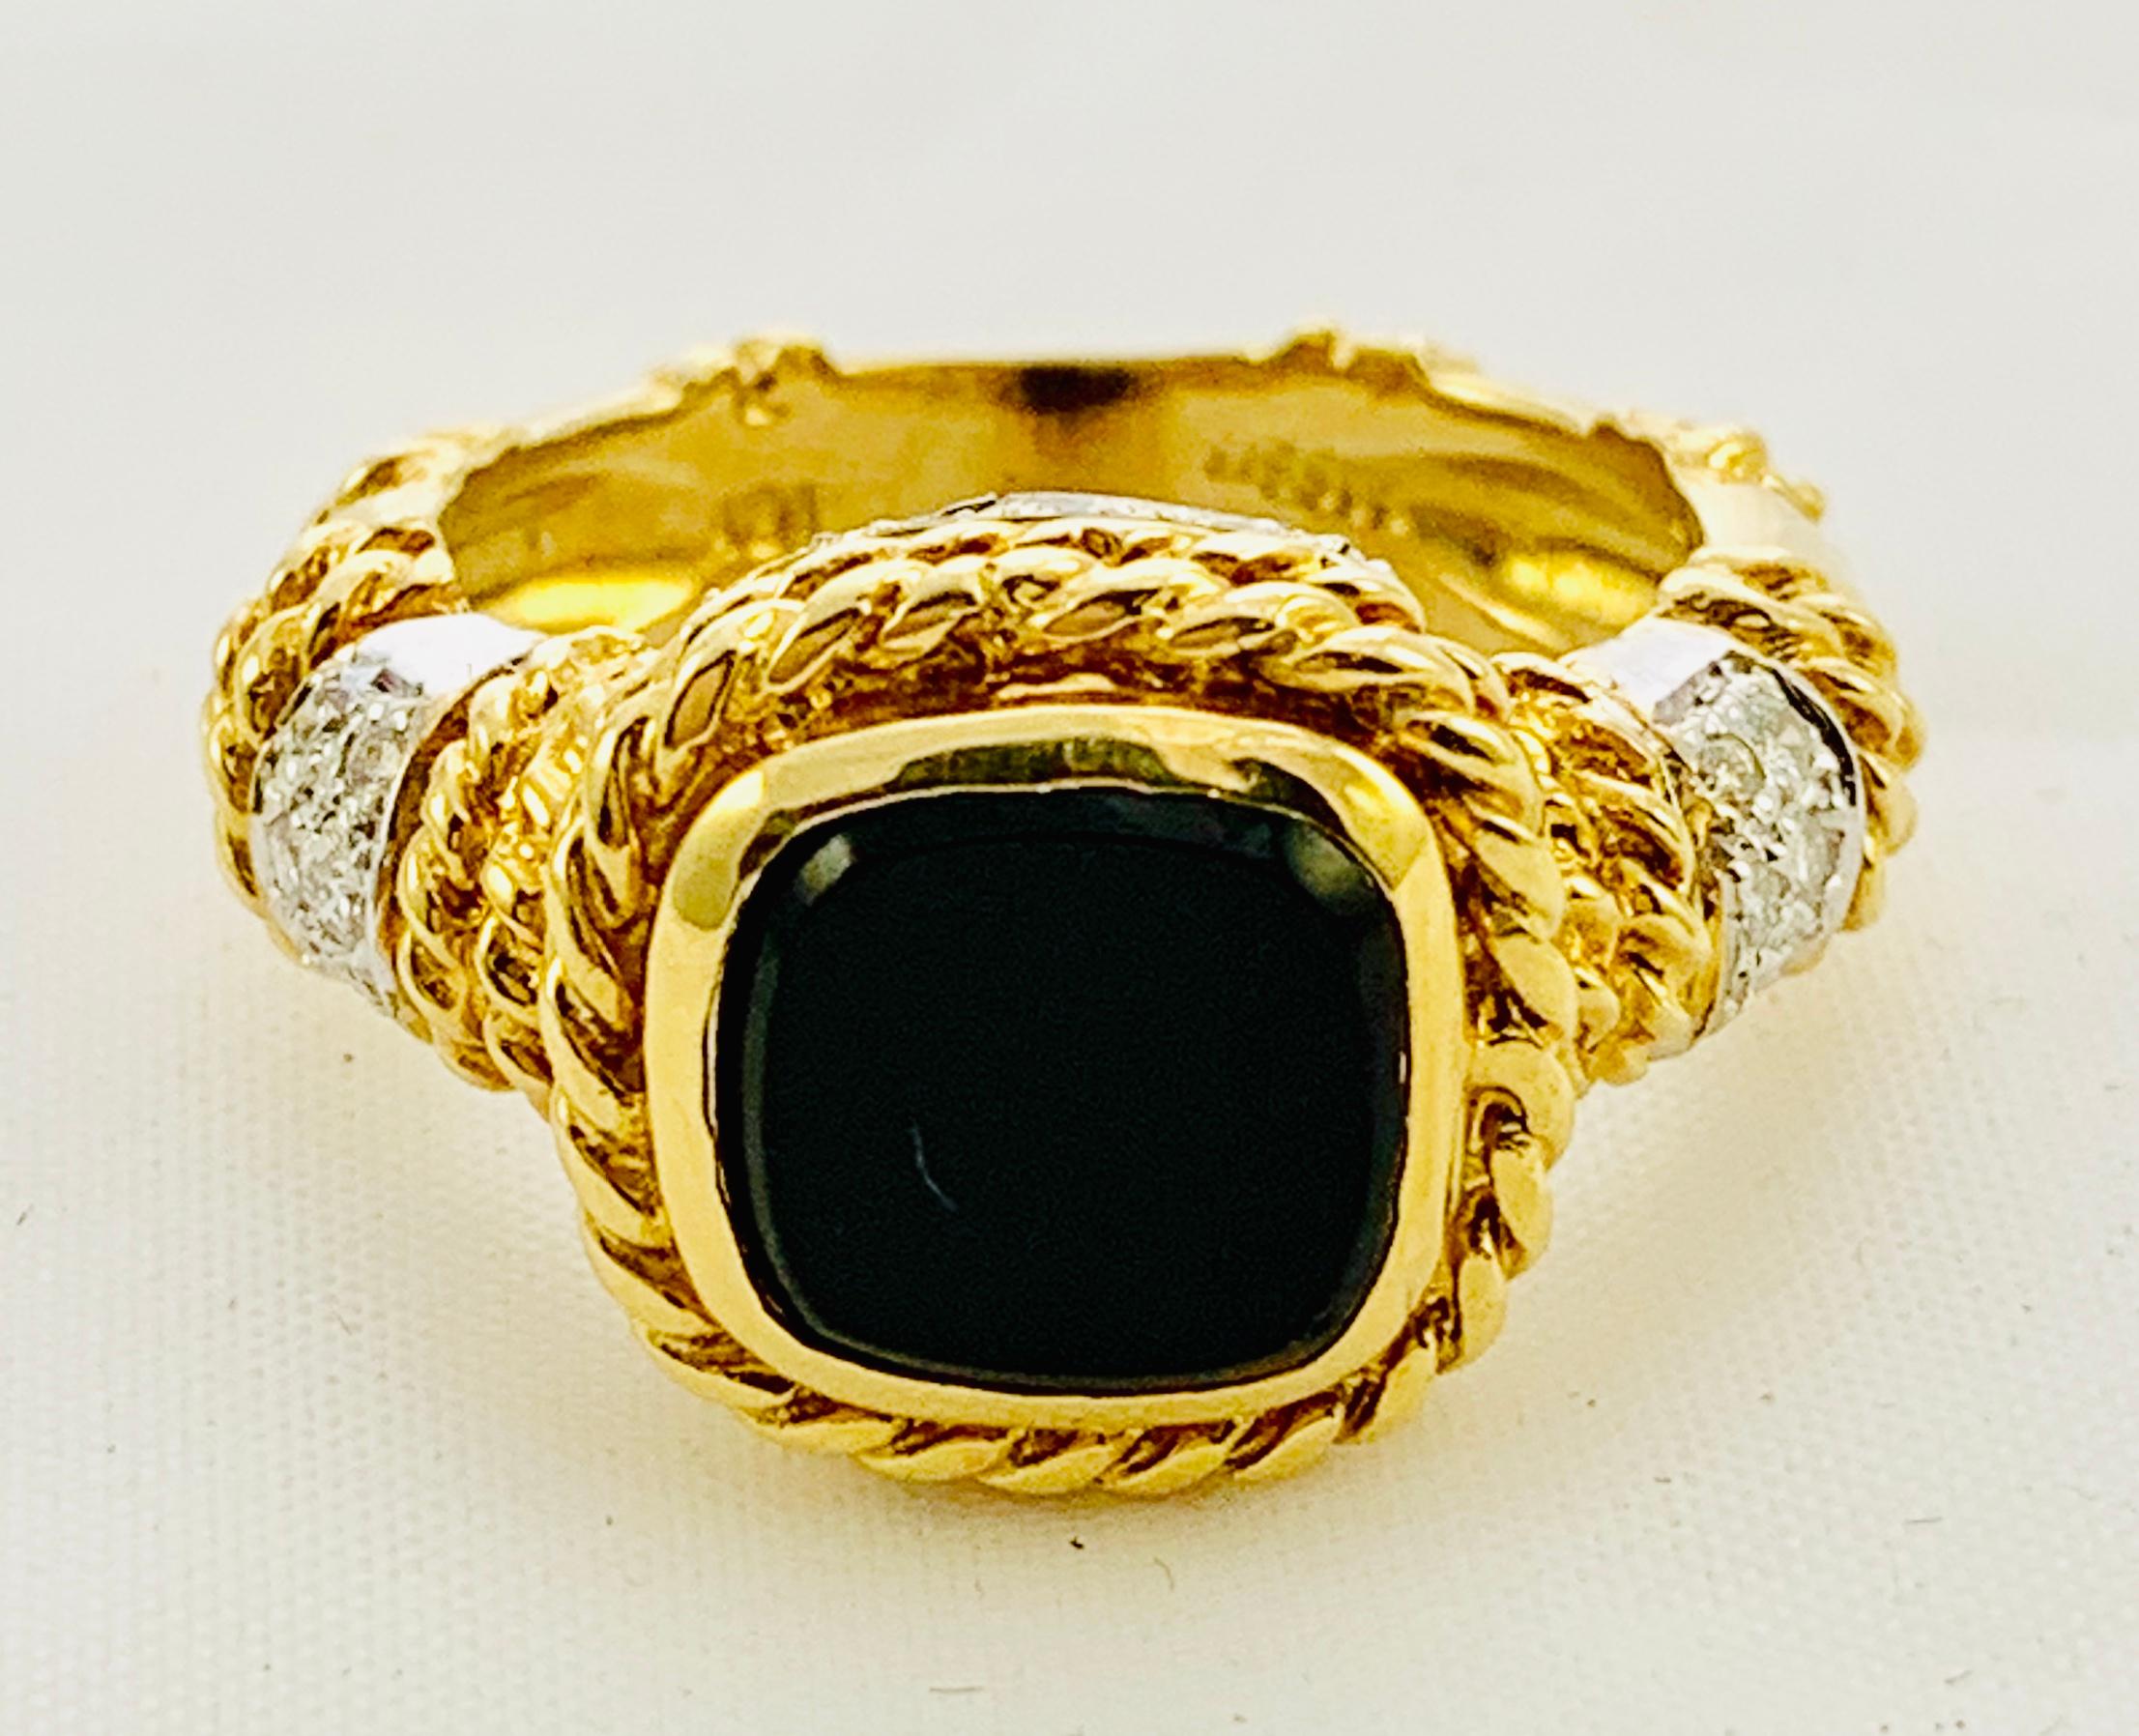 Designer Cassis 18K yellow Gold, Diamond & Onyx ladies Ring Size 5.75  7